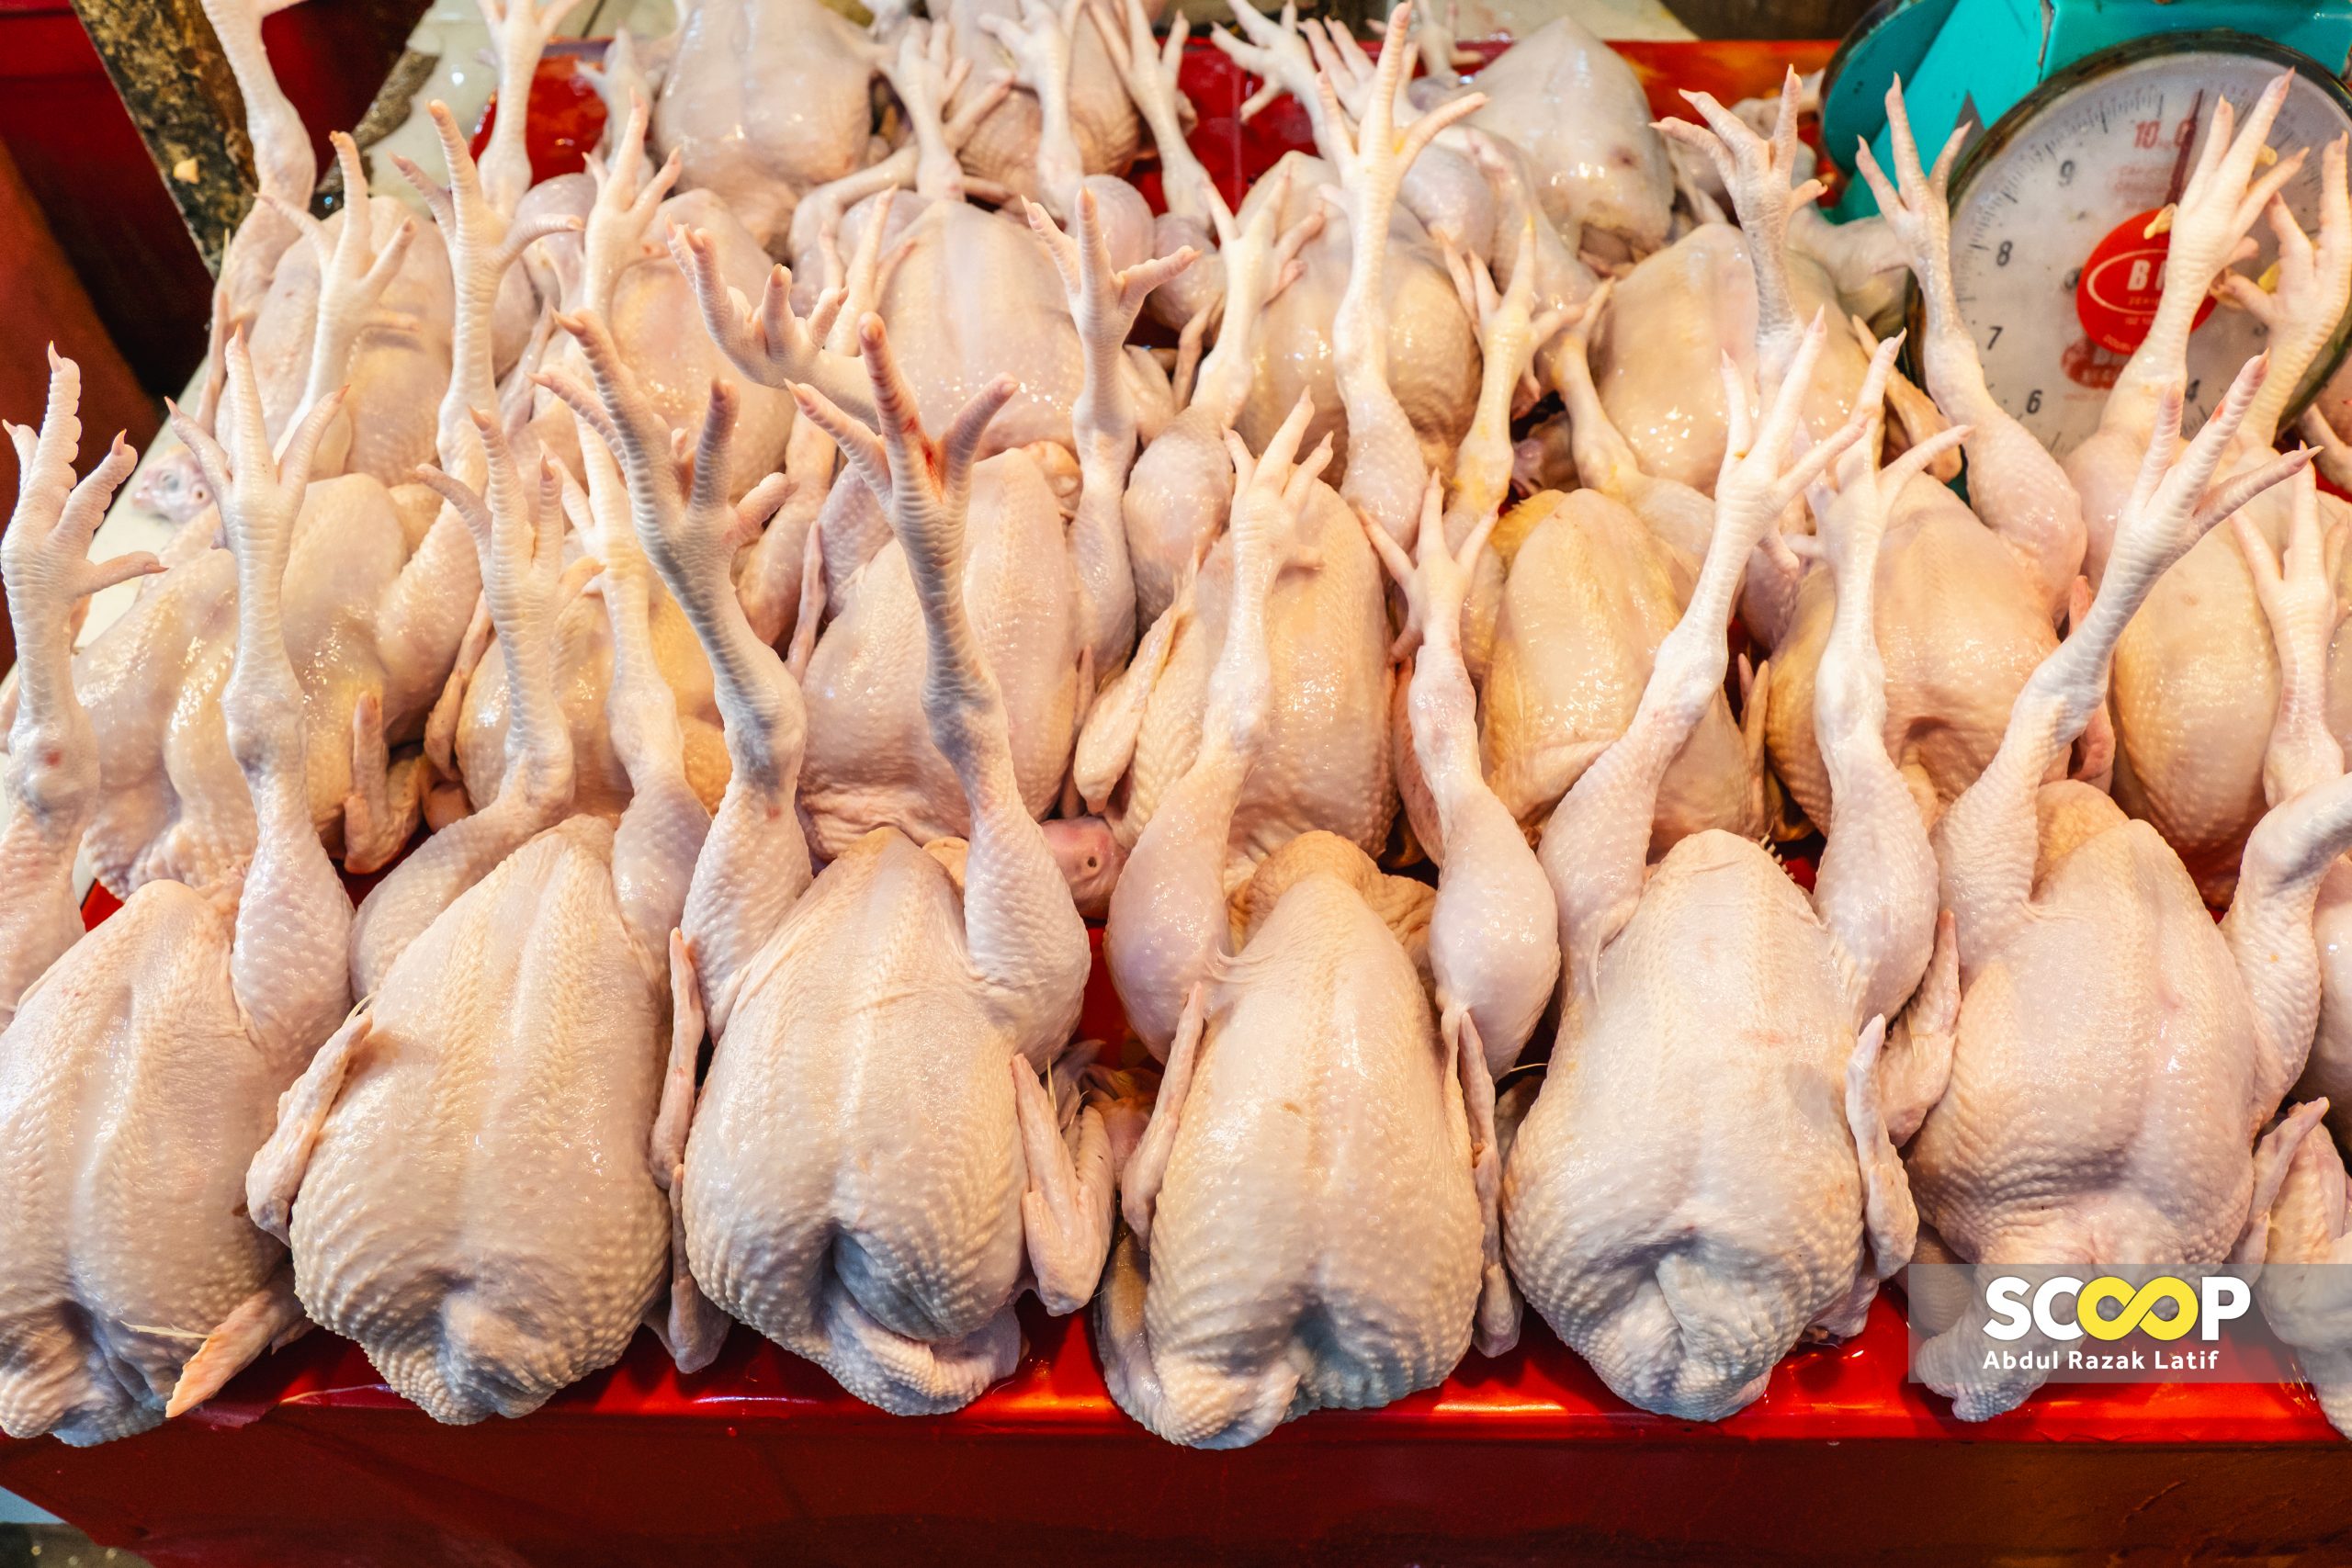 Tamatkan subsidi ayam langkah tepat, peruntukan dialih tingkat inisiatif kebajikan rakyat: FOMCA